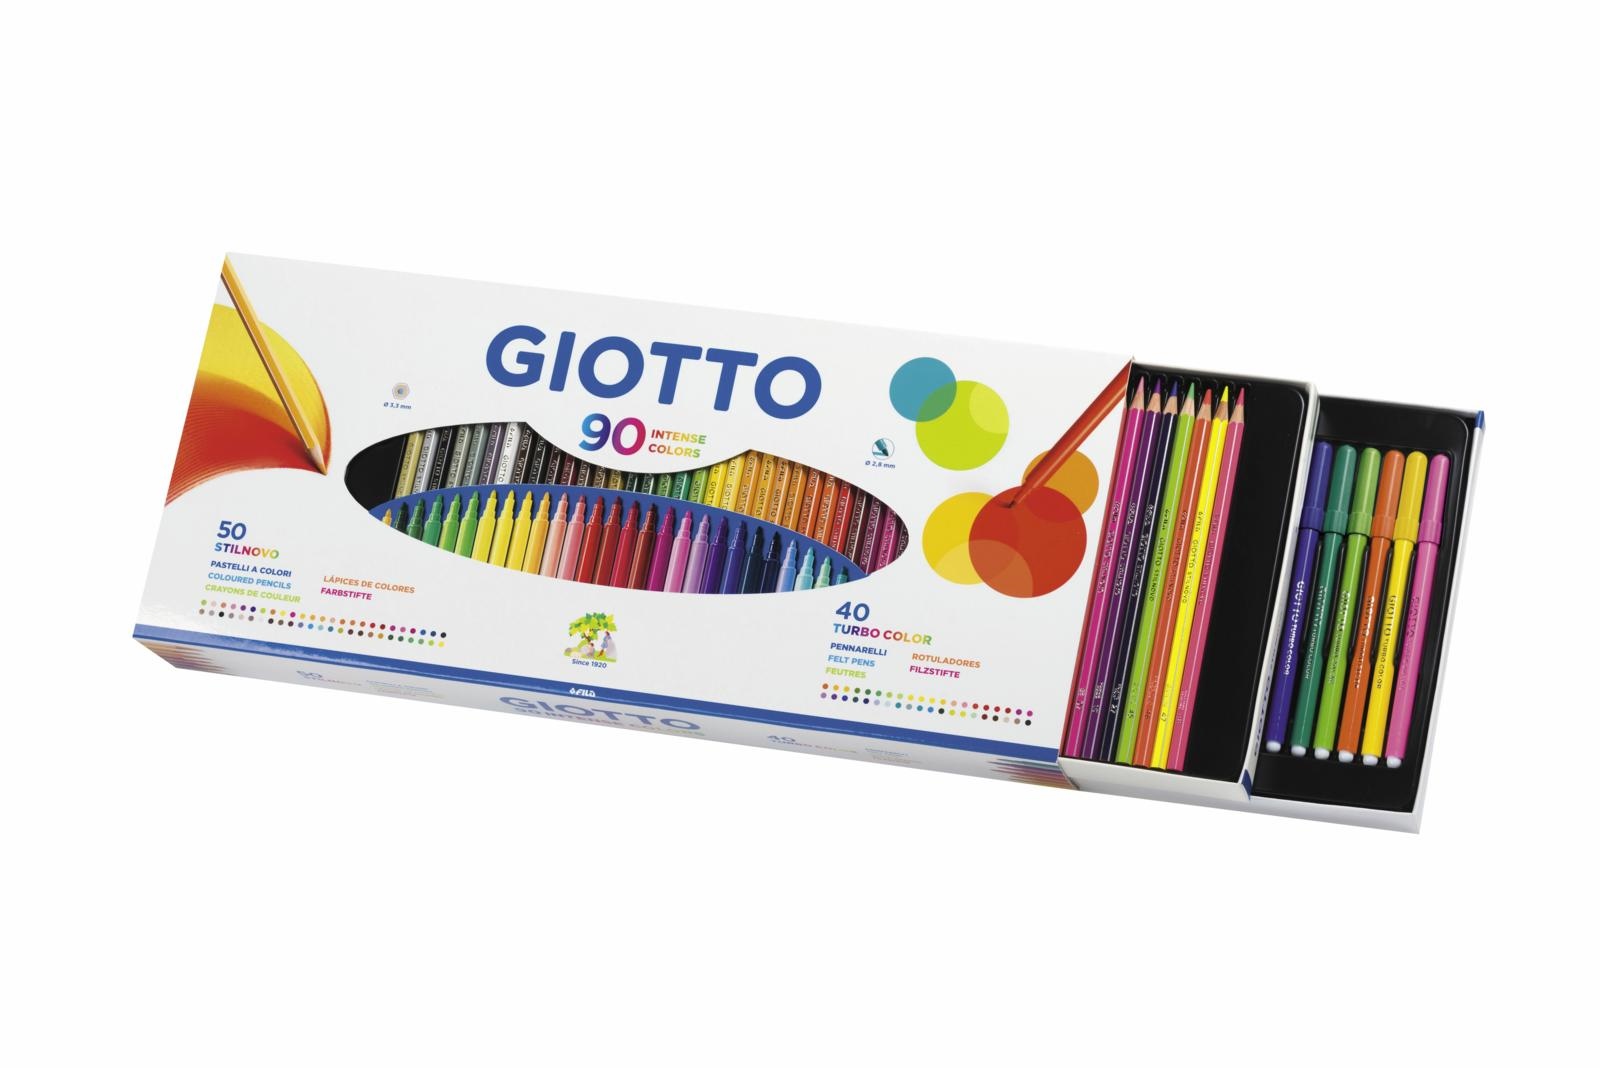 Giotto 90 colours special set. 50 stilnovo + 40 turbo color